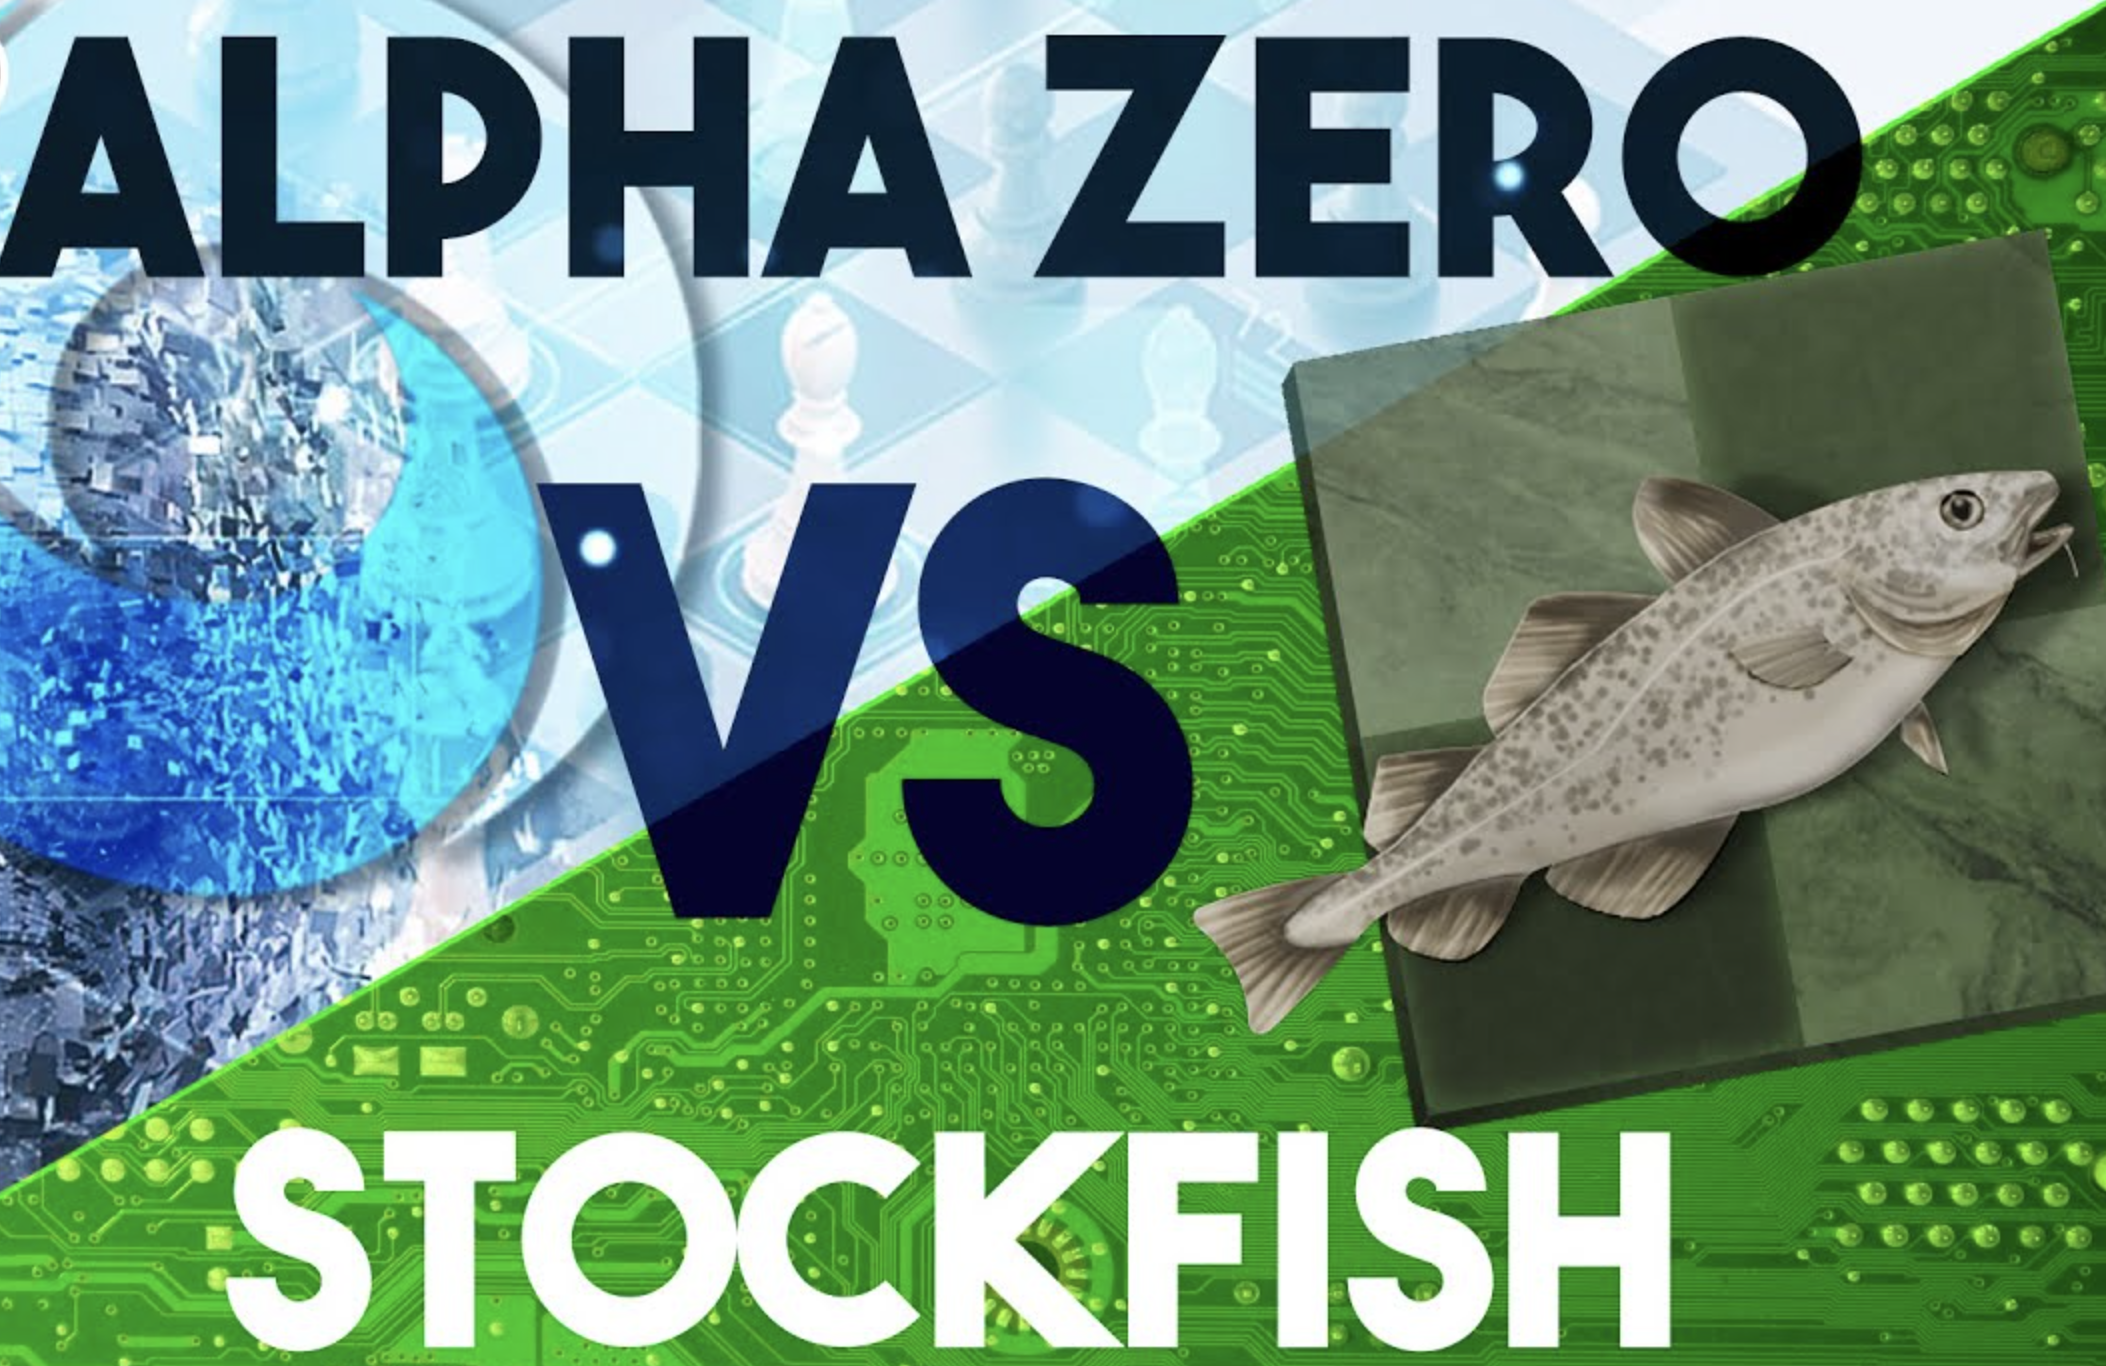 Evolved, Alpha Zero 16 vs Stockfish 16, Evolution of Engines